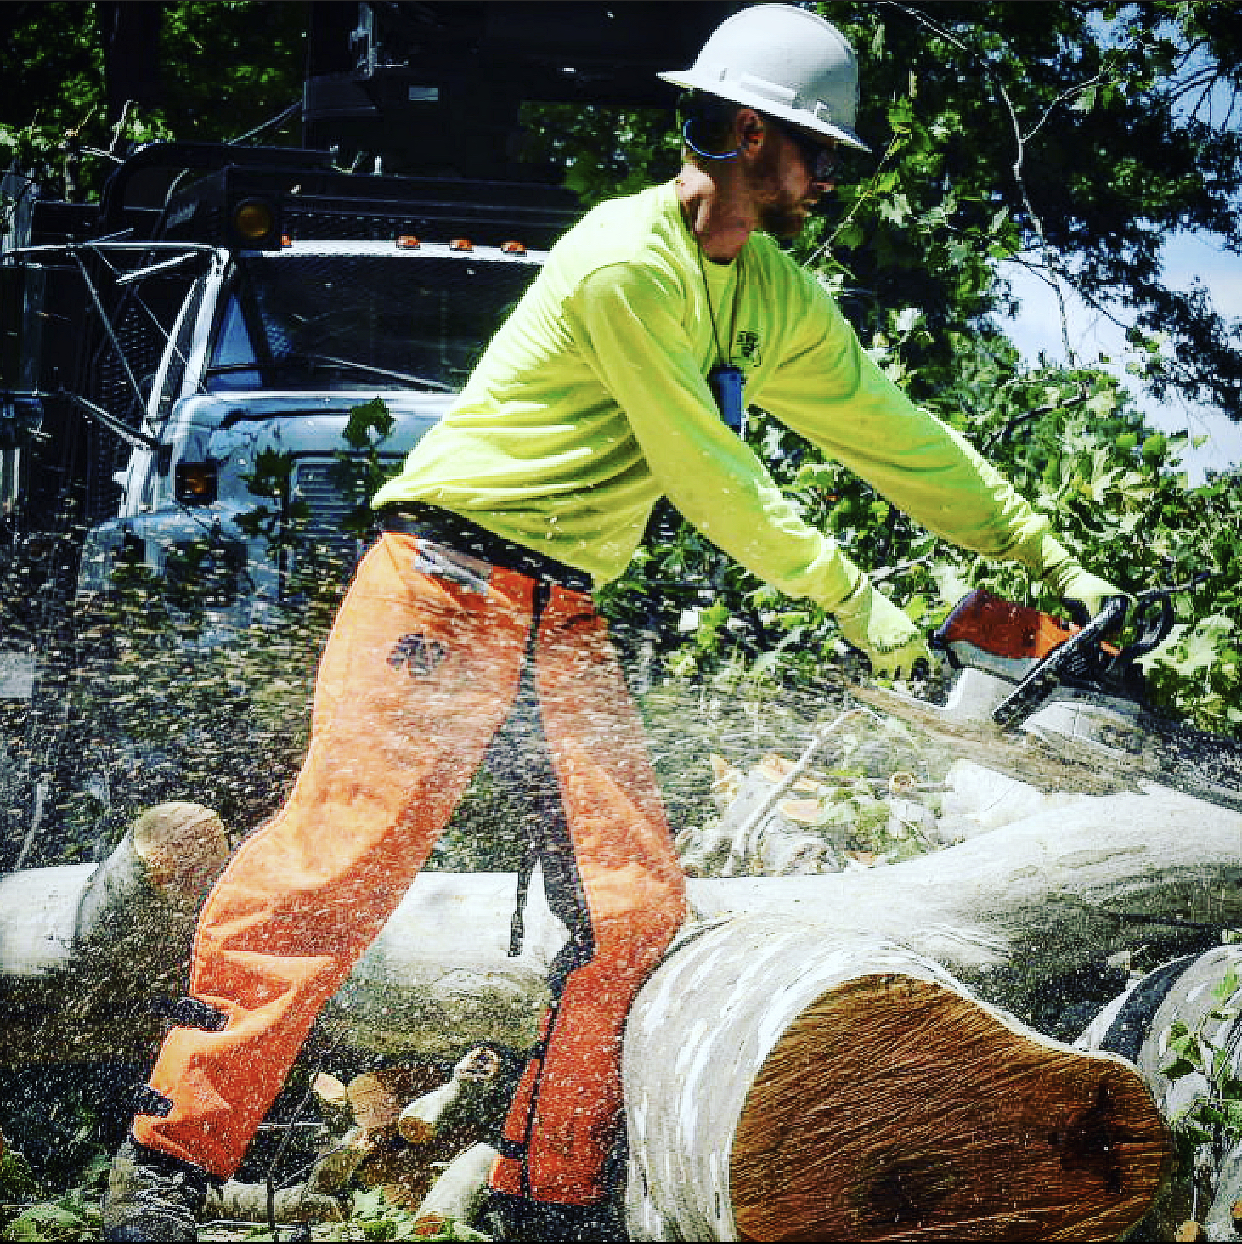 An arborist in harness cutting down an elm tree